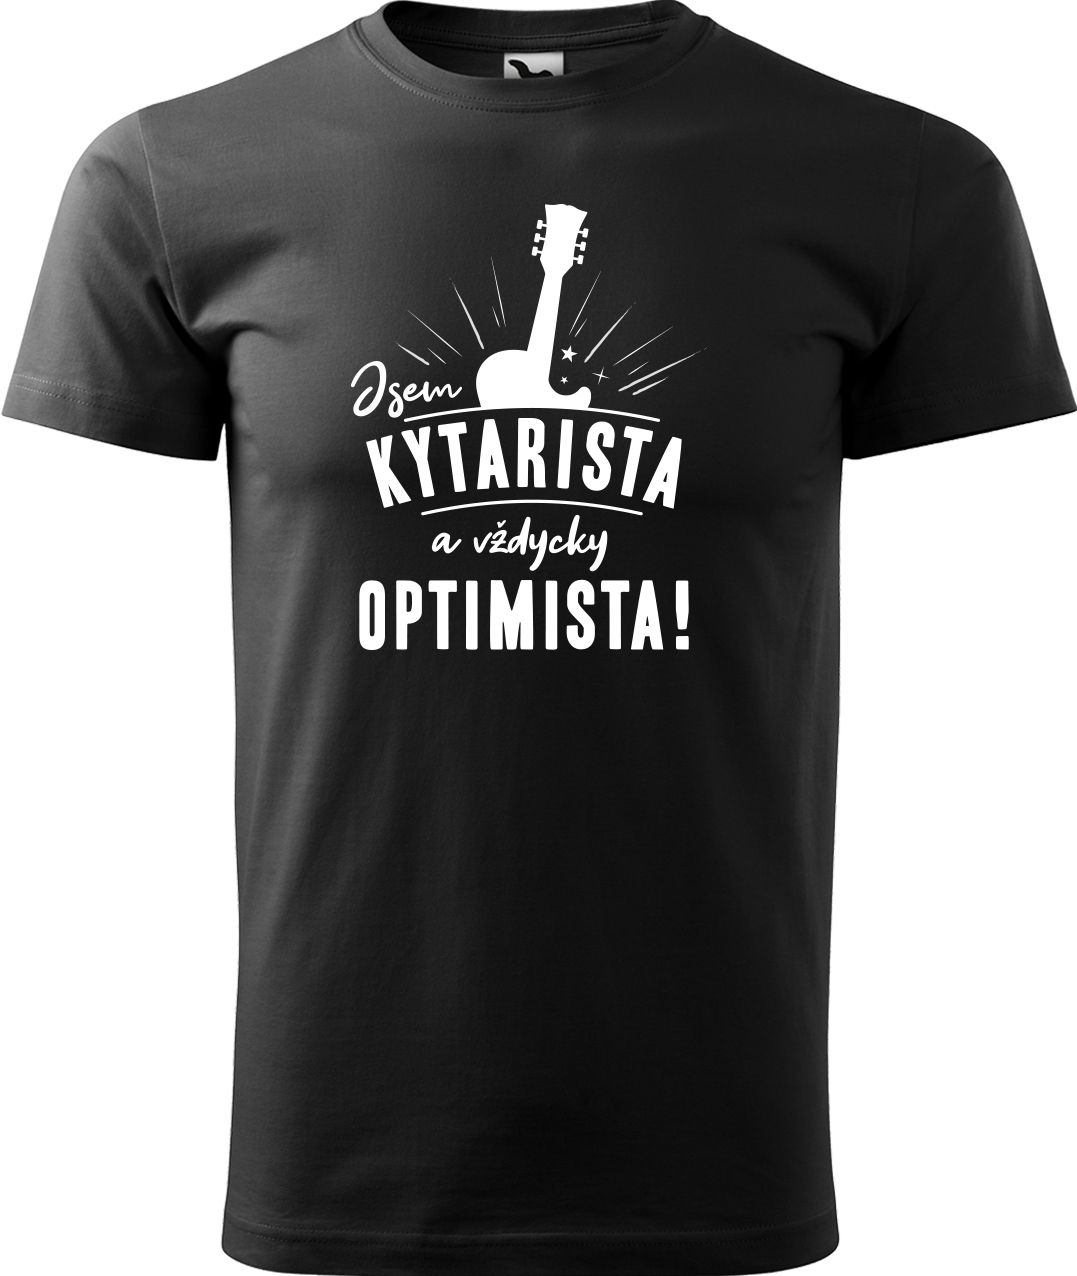 Pánské tričko s kytarou - Kytarista optimista Velikost: M, Barva: Černá (01), Střih: pánský